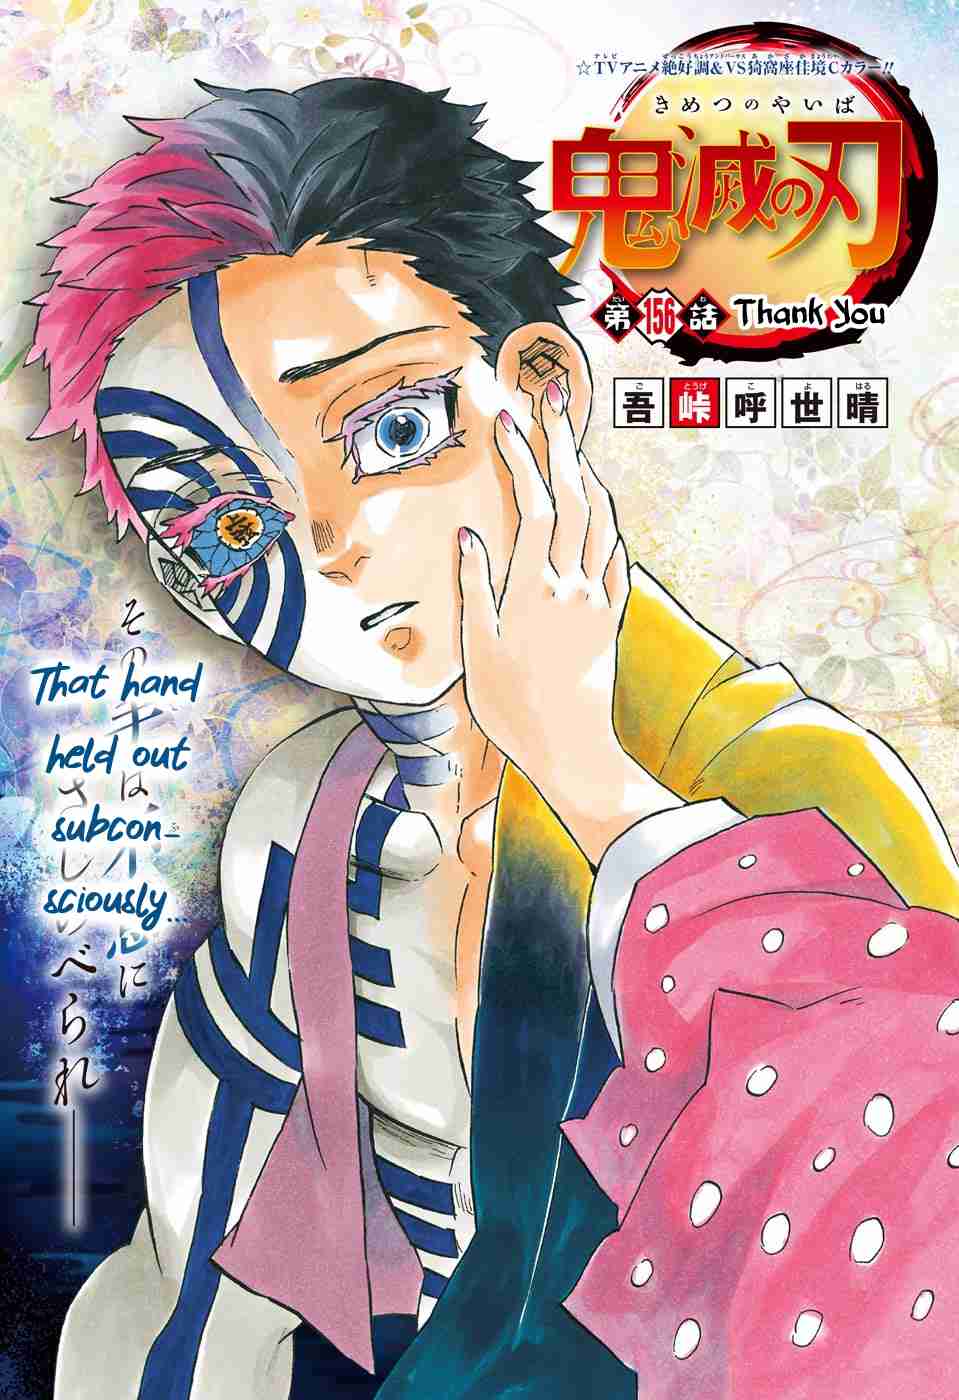 Kimetsu no Yaiba Digital Colored Comics Ch. 156 Thank You